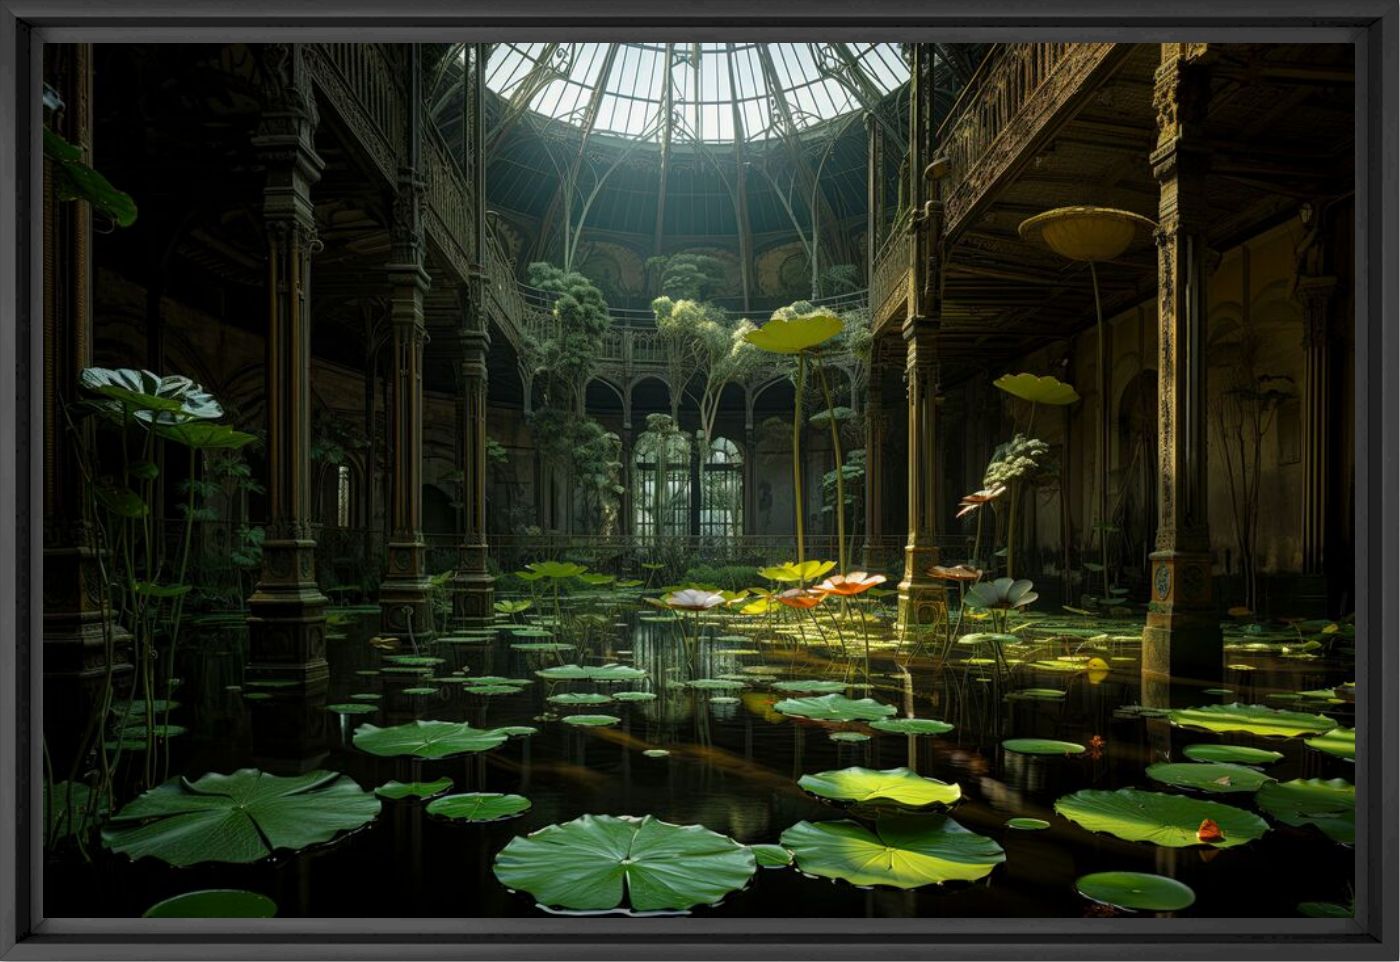 Fotografia Water lilies paradises - FRANCIS  MESLET - Pittura di immagini